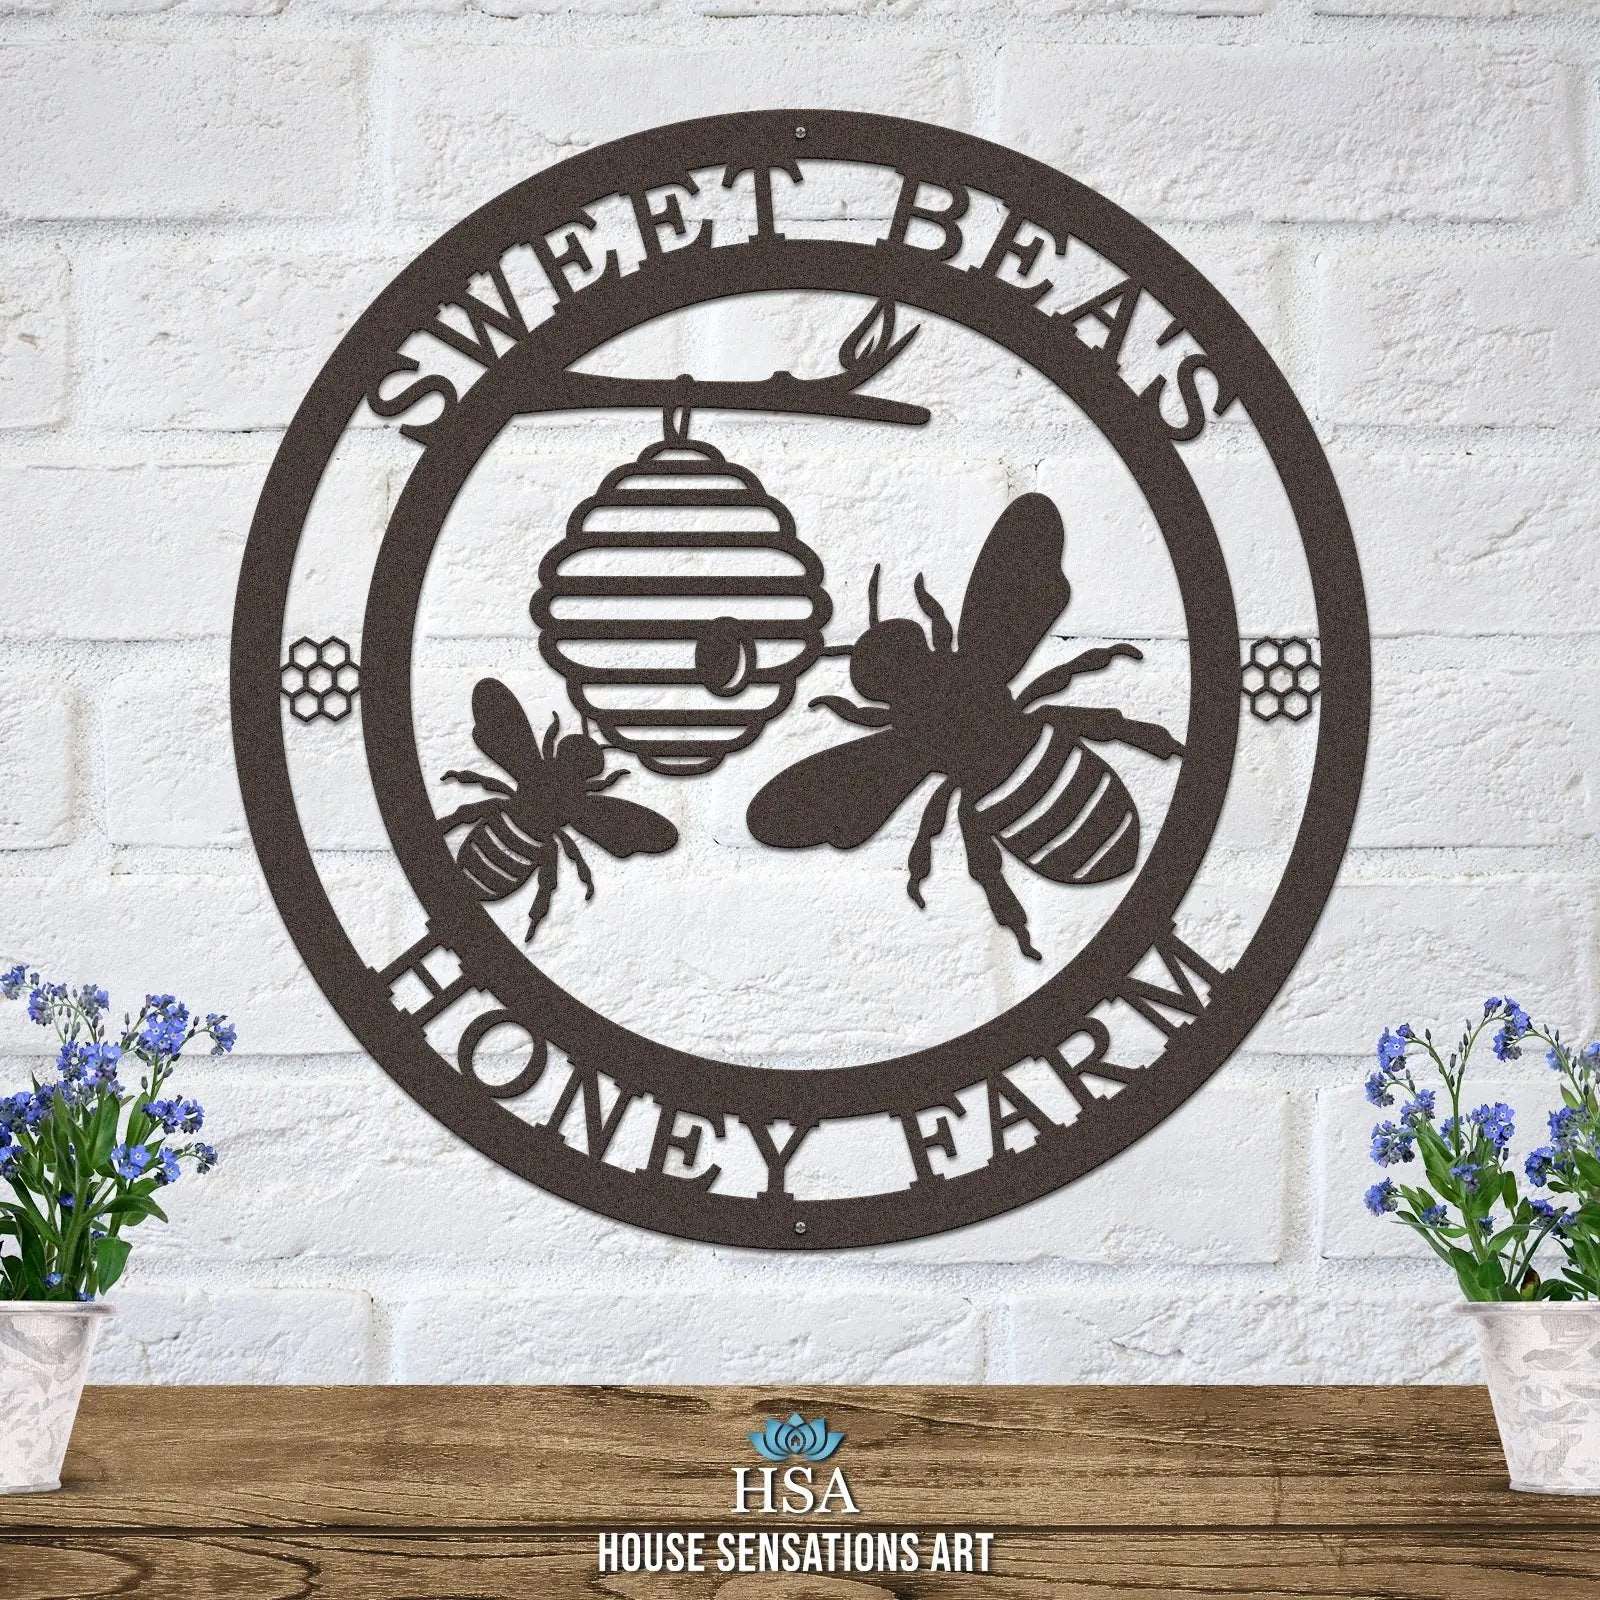 Honey Bee Family Name Established Sign Family Sign House Sensations Art   